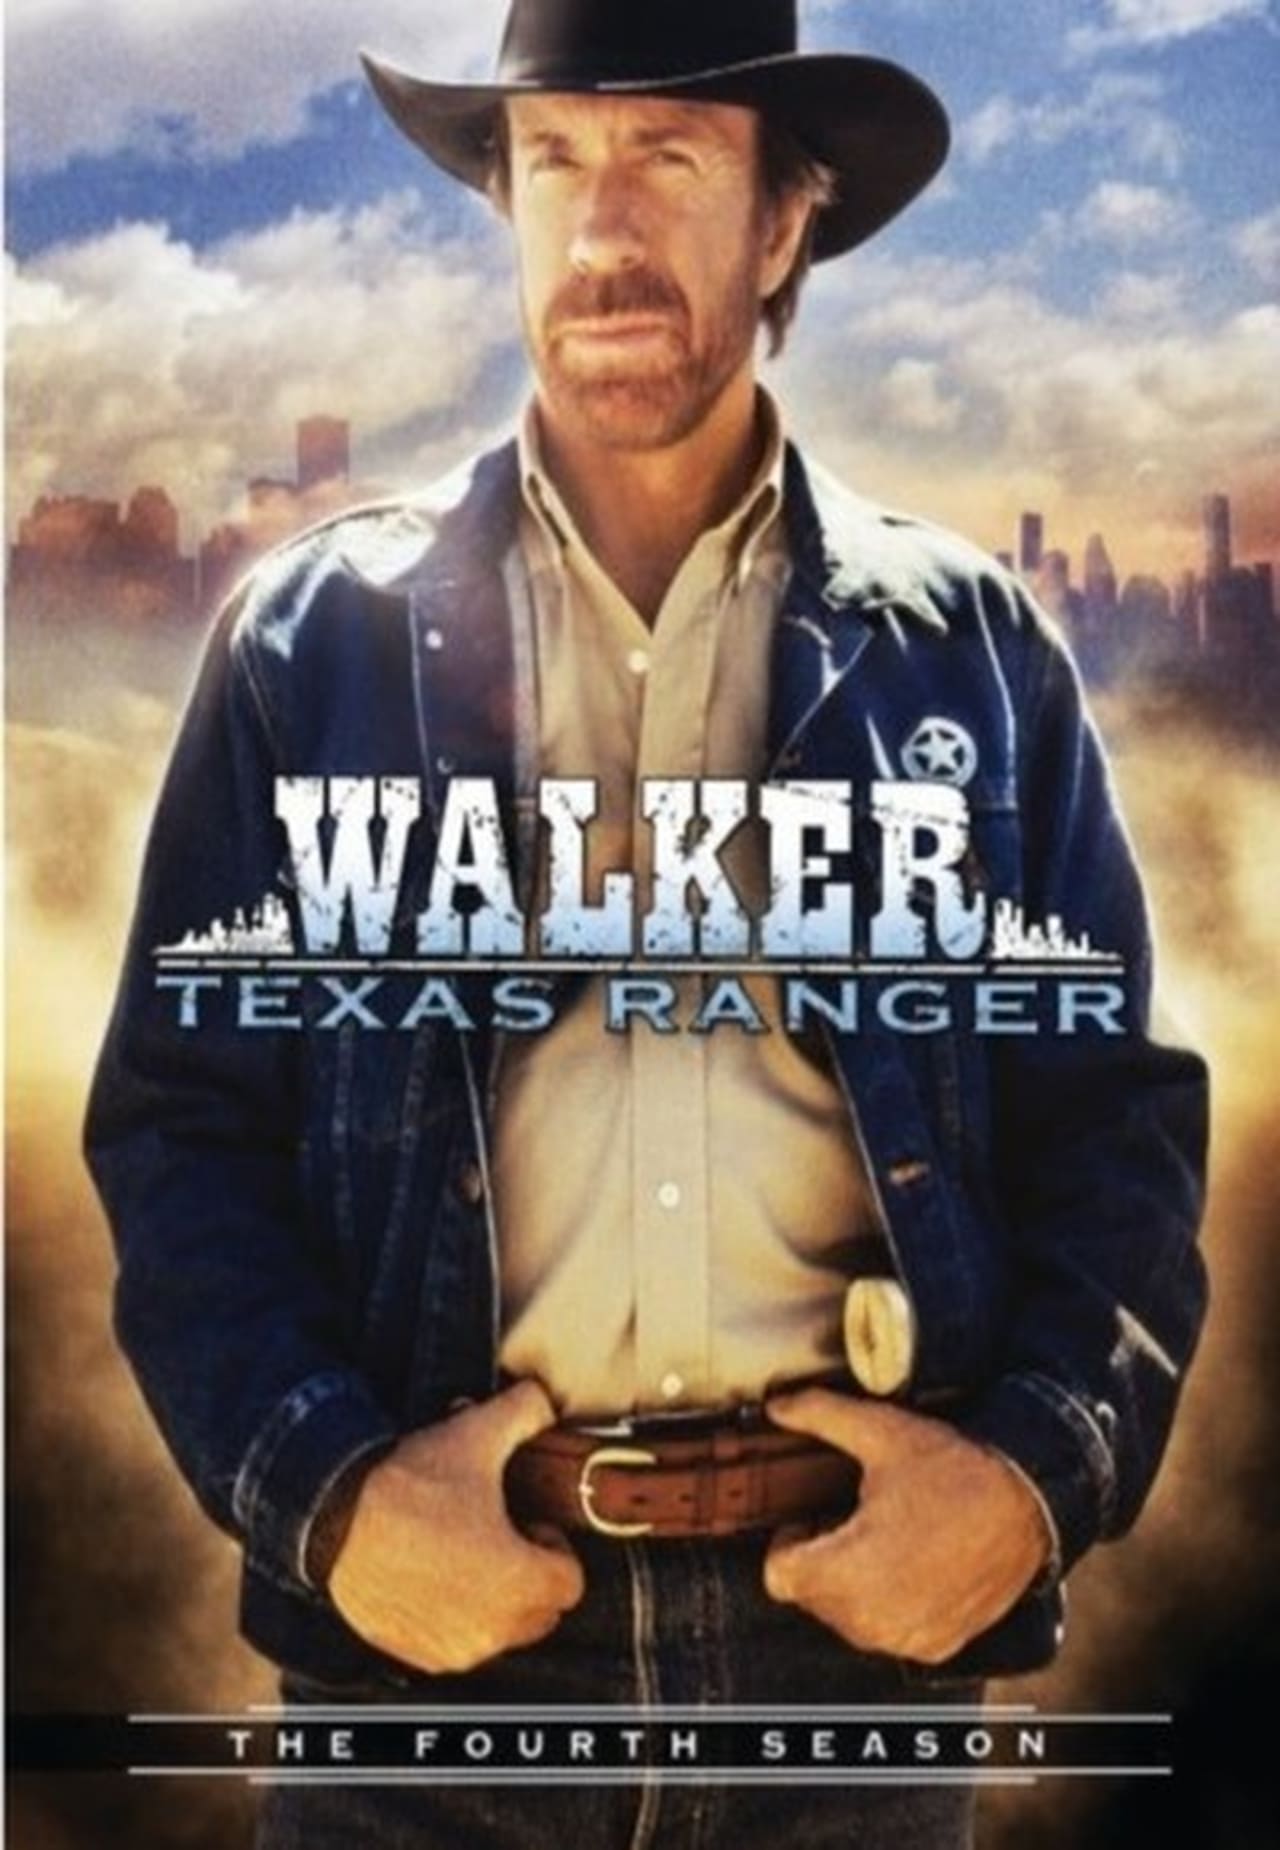 Walker, Texas Ranger Season 4